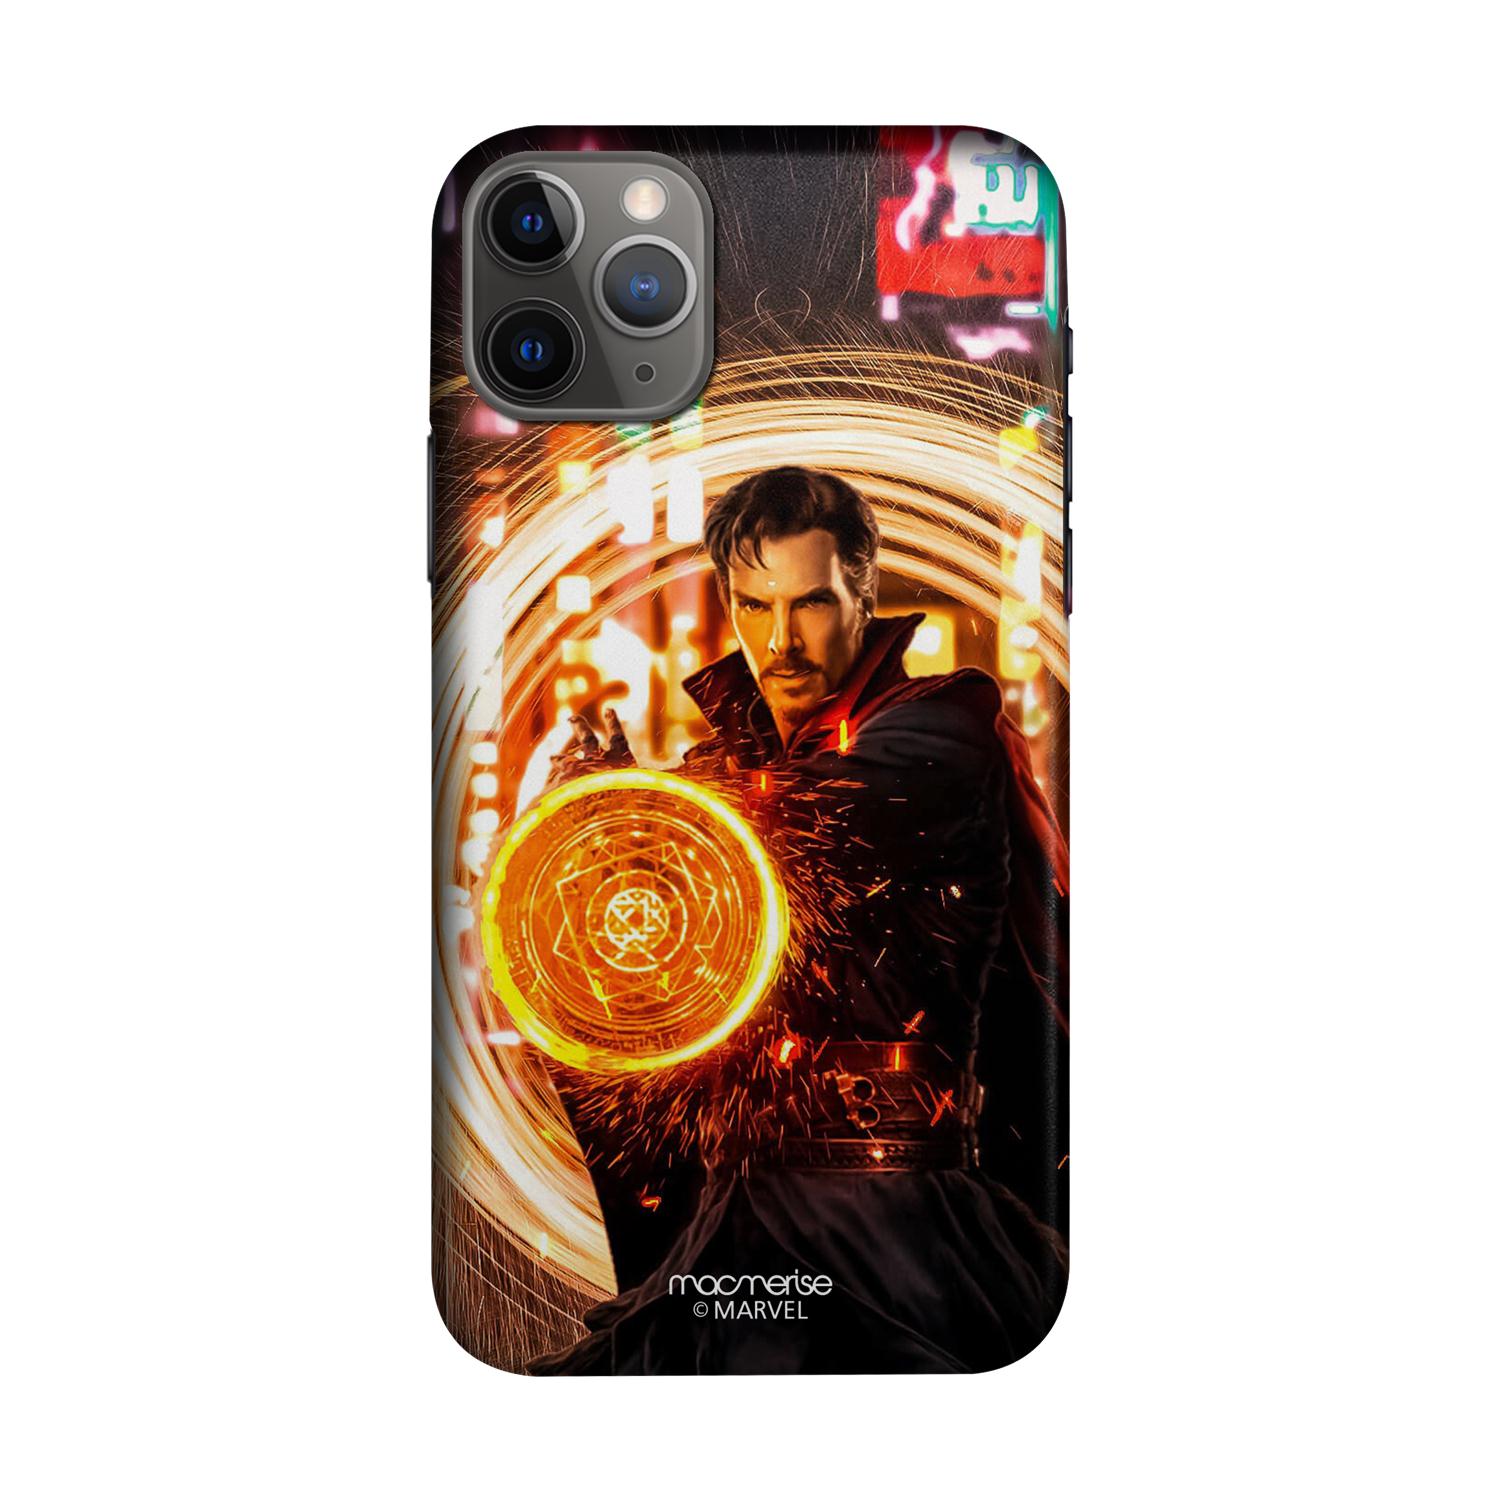 Buy Dr Strange Opening Portal - Sleek Phone Case for iPhone 11 Pro Max Online